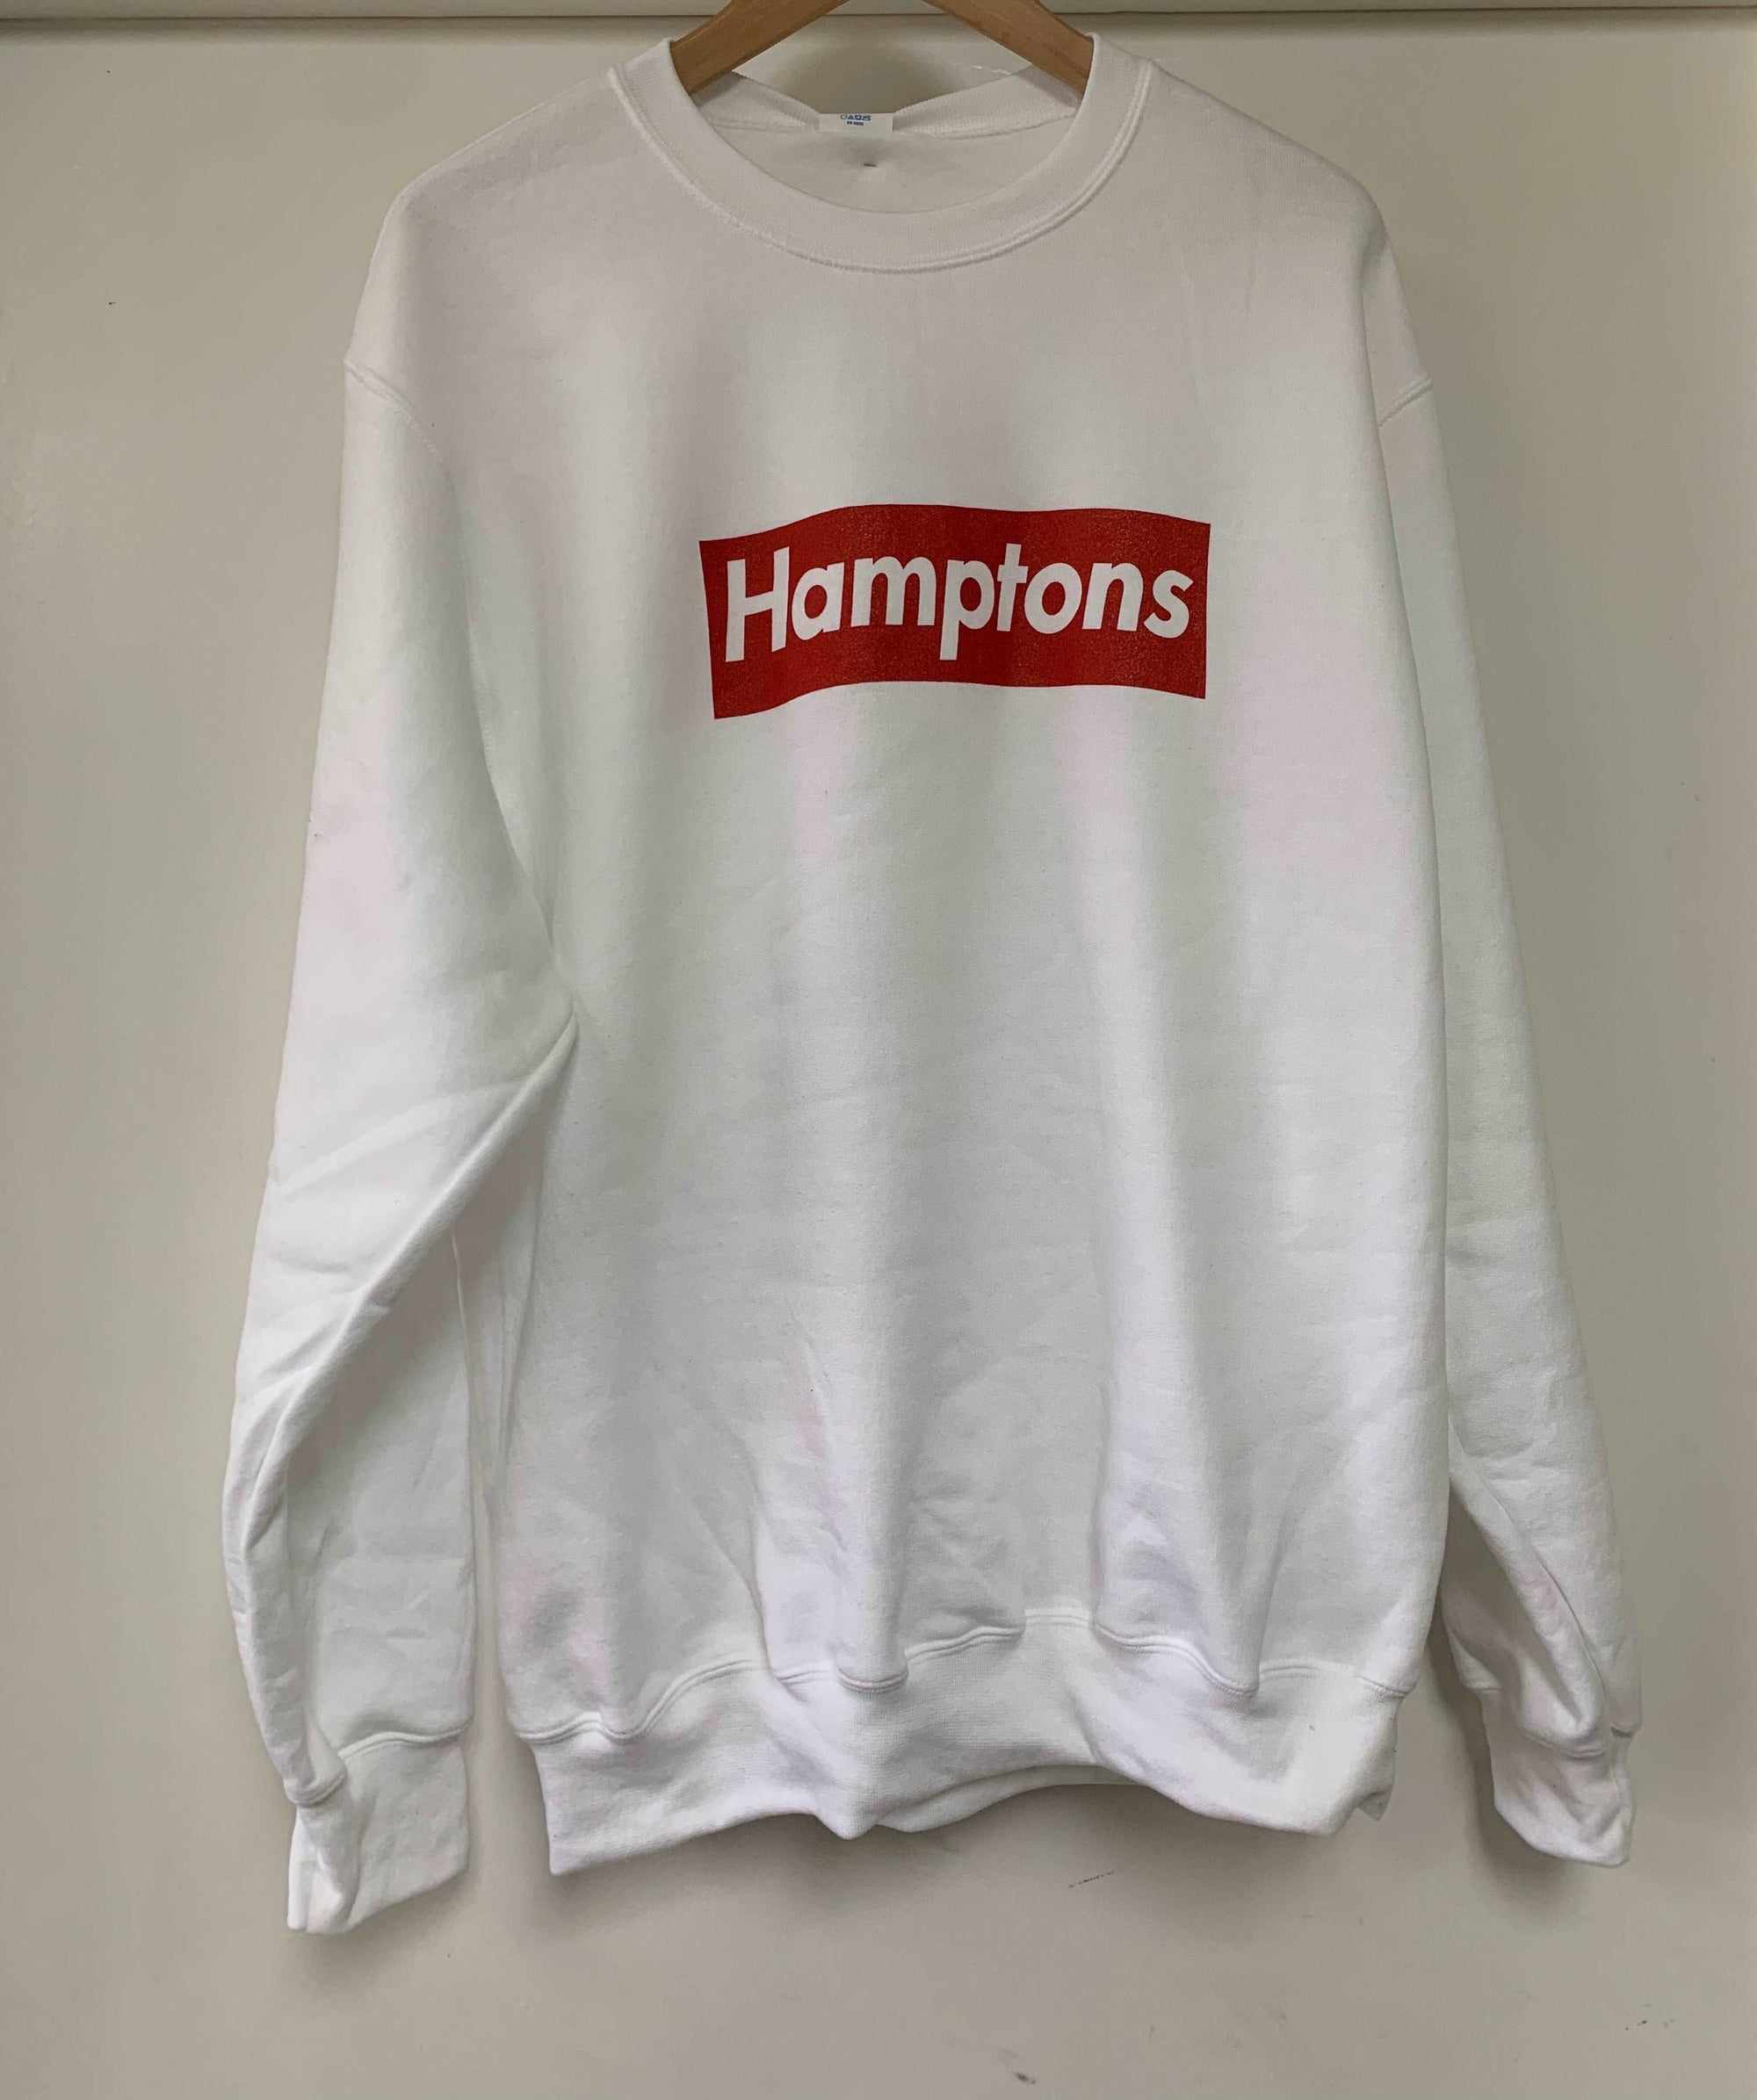 Hampton’s Sweatshirt , Hamptons Shirt, Hampton New York Shirt, Destination Shirt